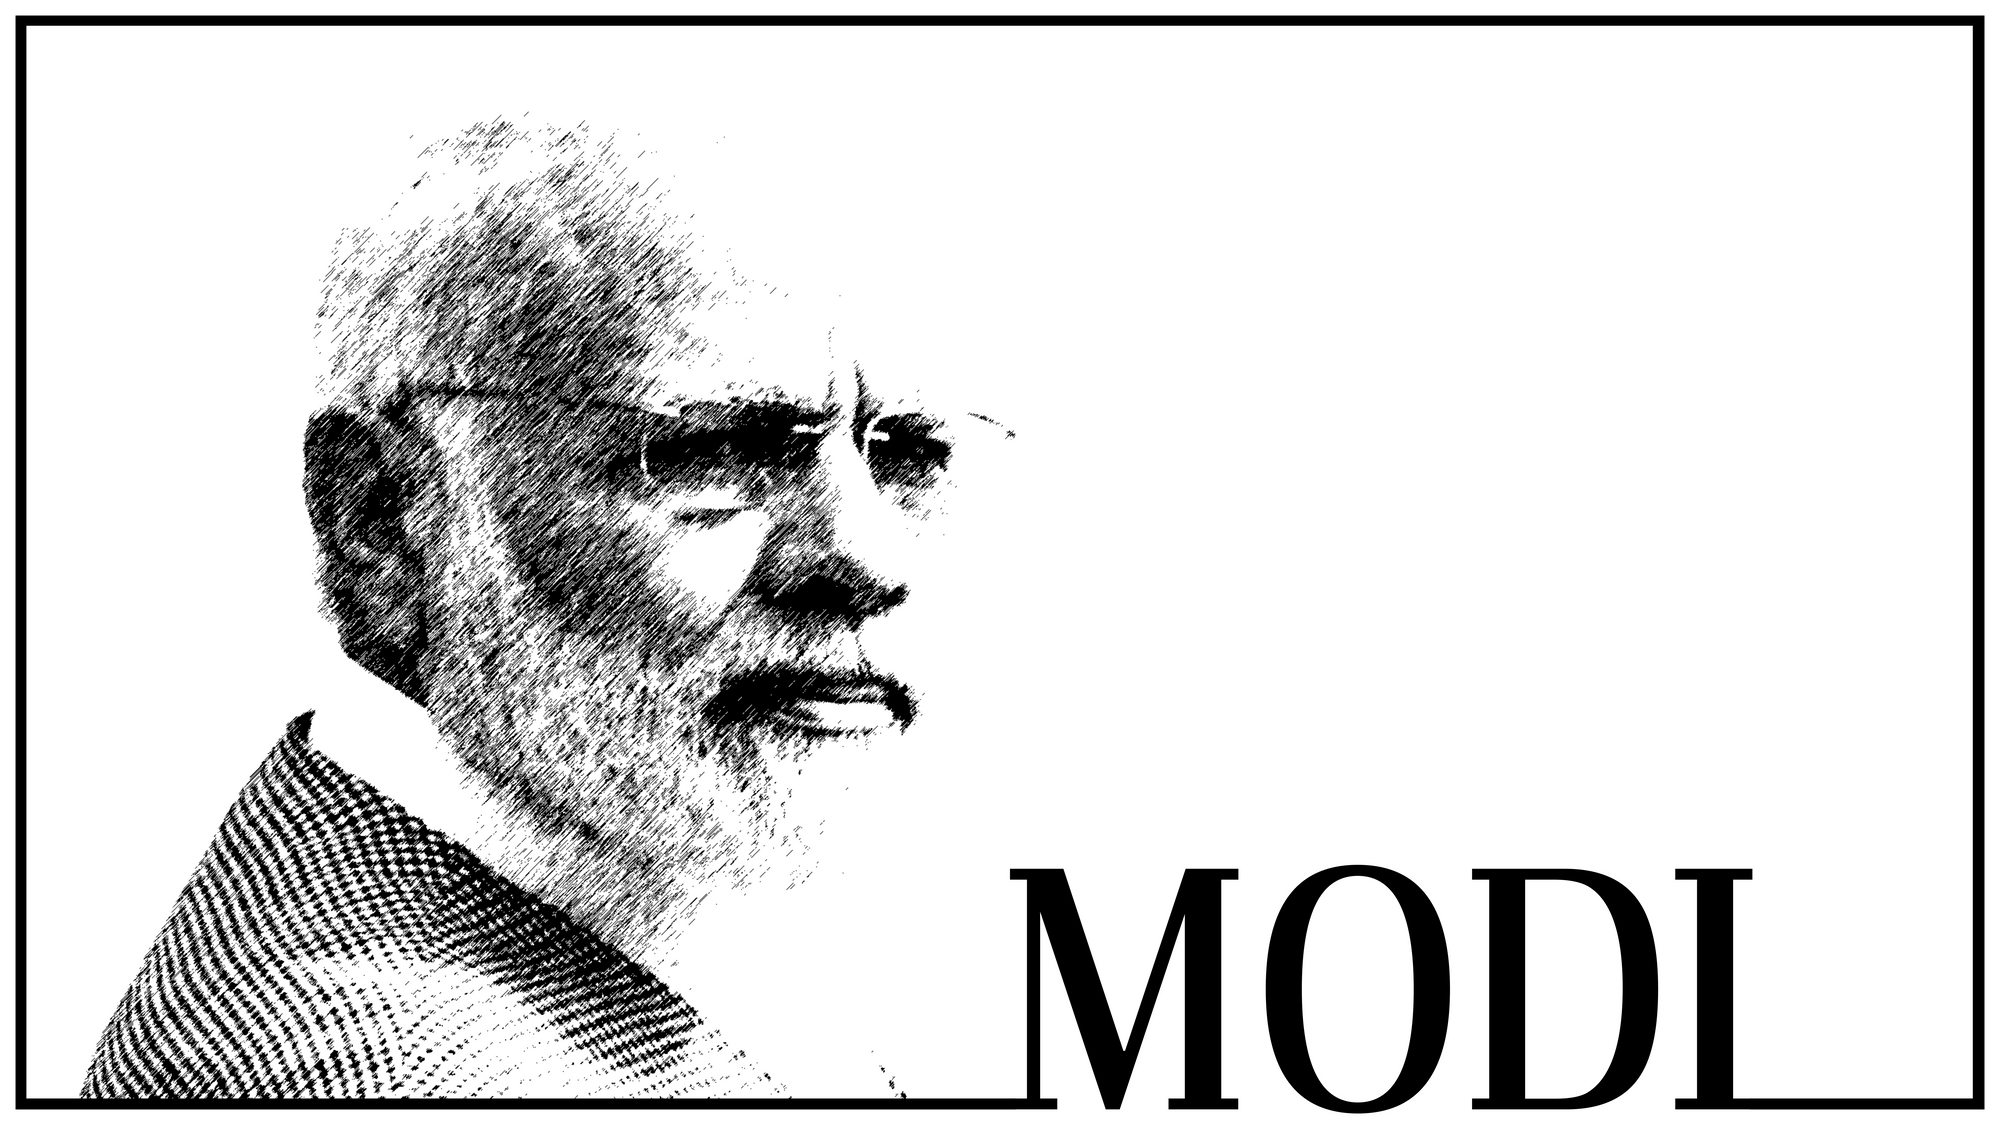 Chronicle: The Gujarat Verdict and Modi